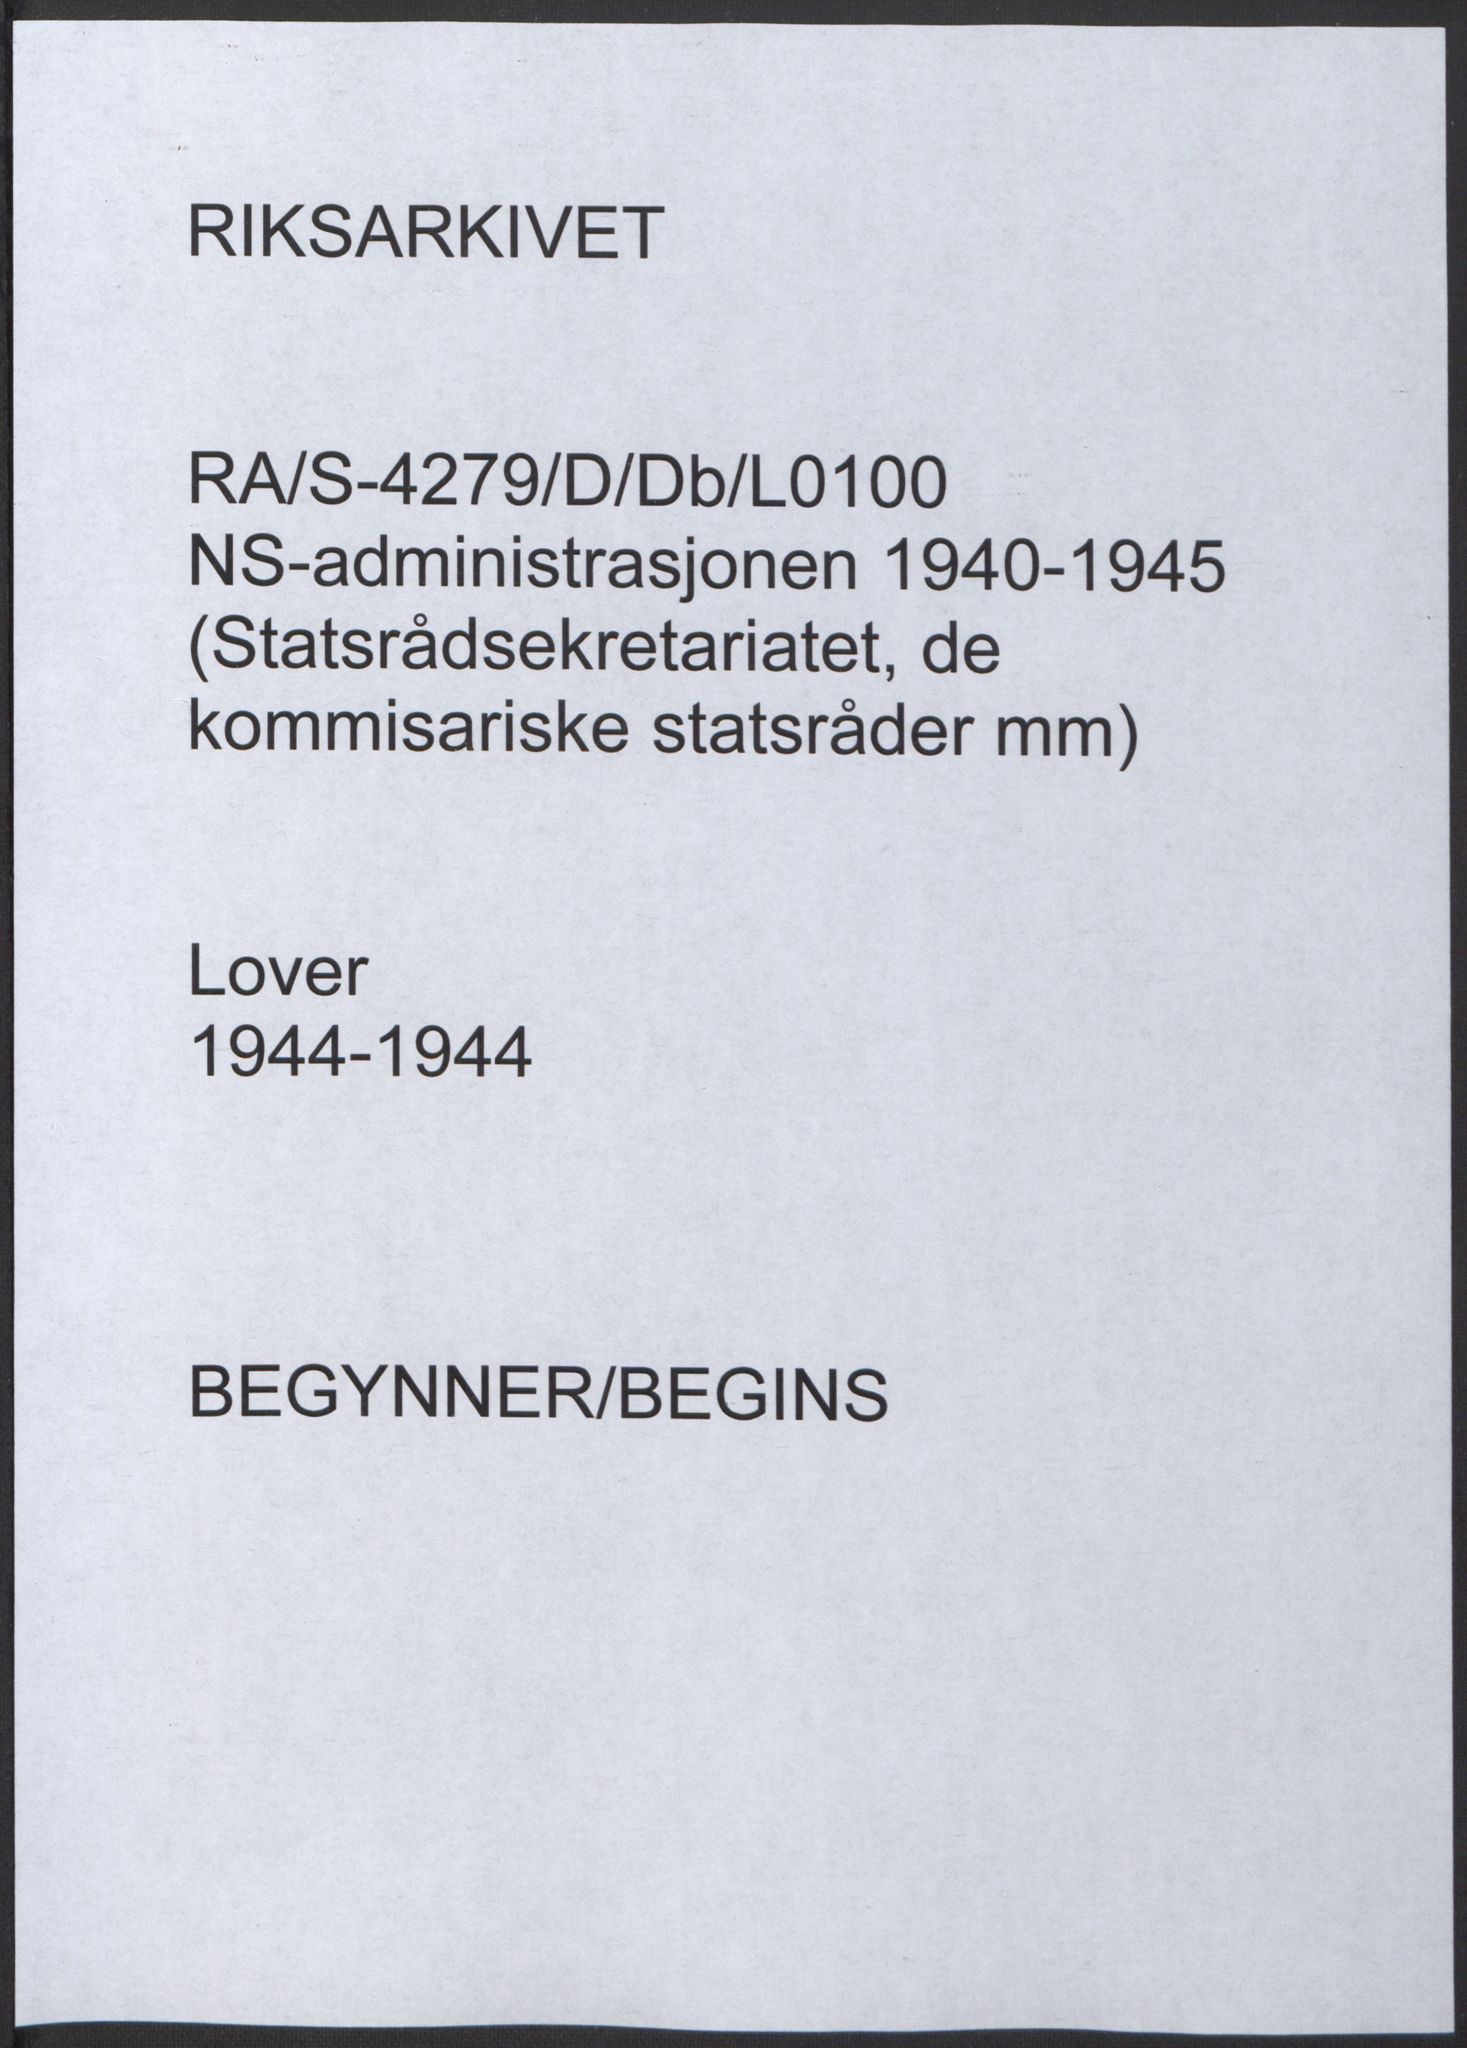 NS-administrasjonen 1940-1945 (Statsrådsekretariatet, de kommisariske statsråder mm), RA/S-4279/D/Db/L0100: Lover, 1944, p. 1